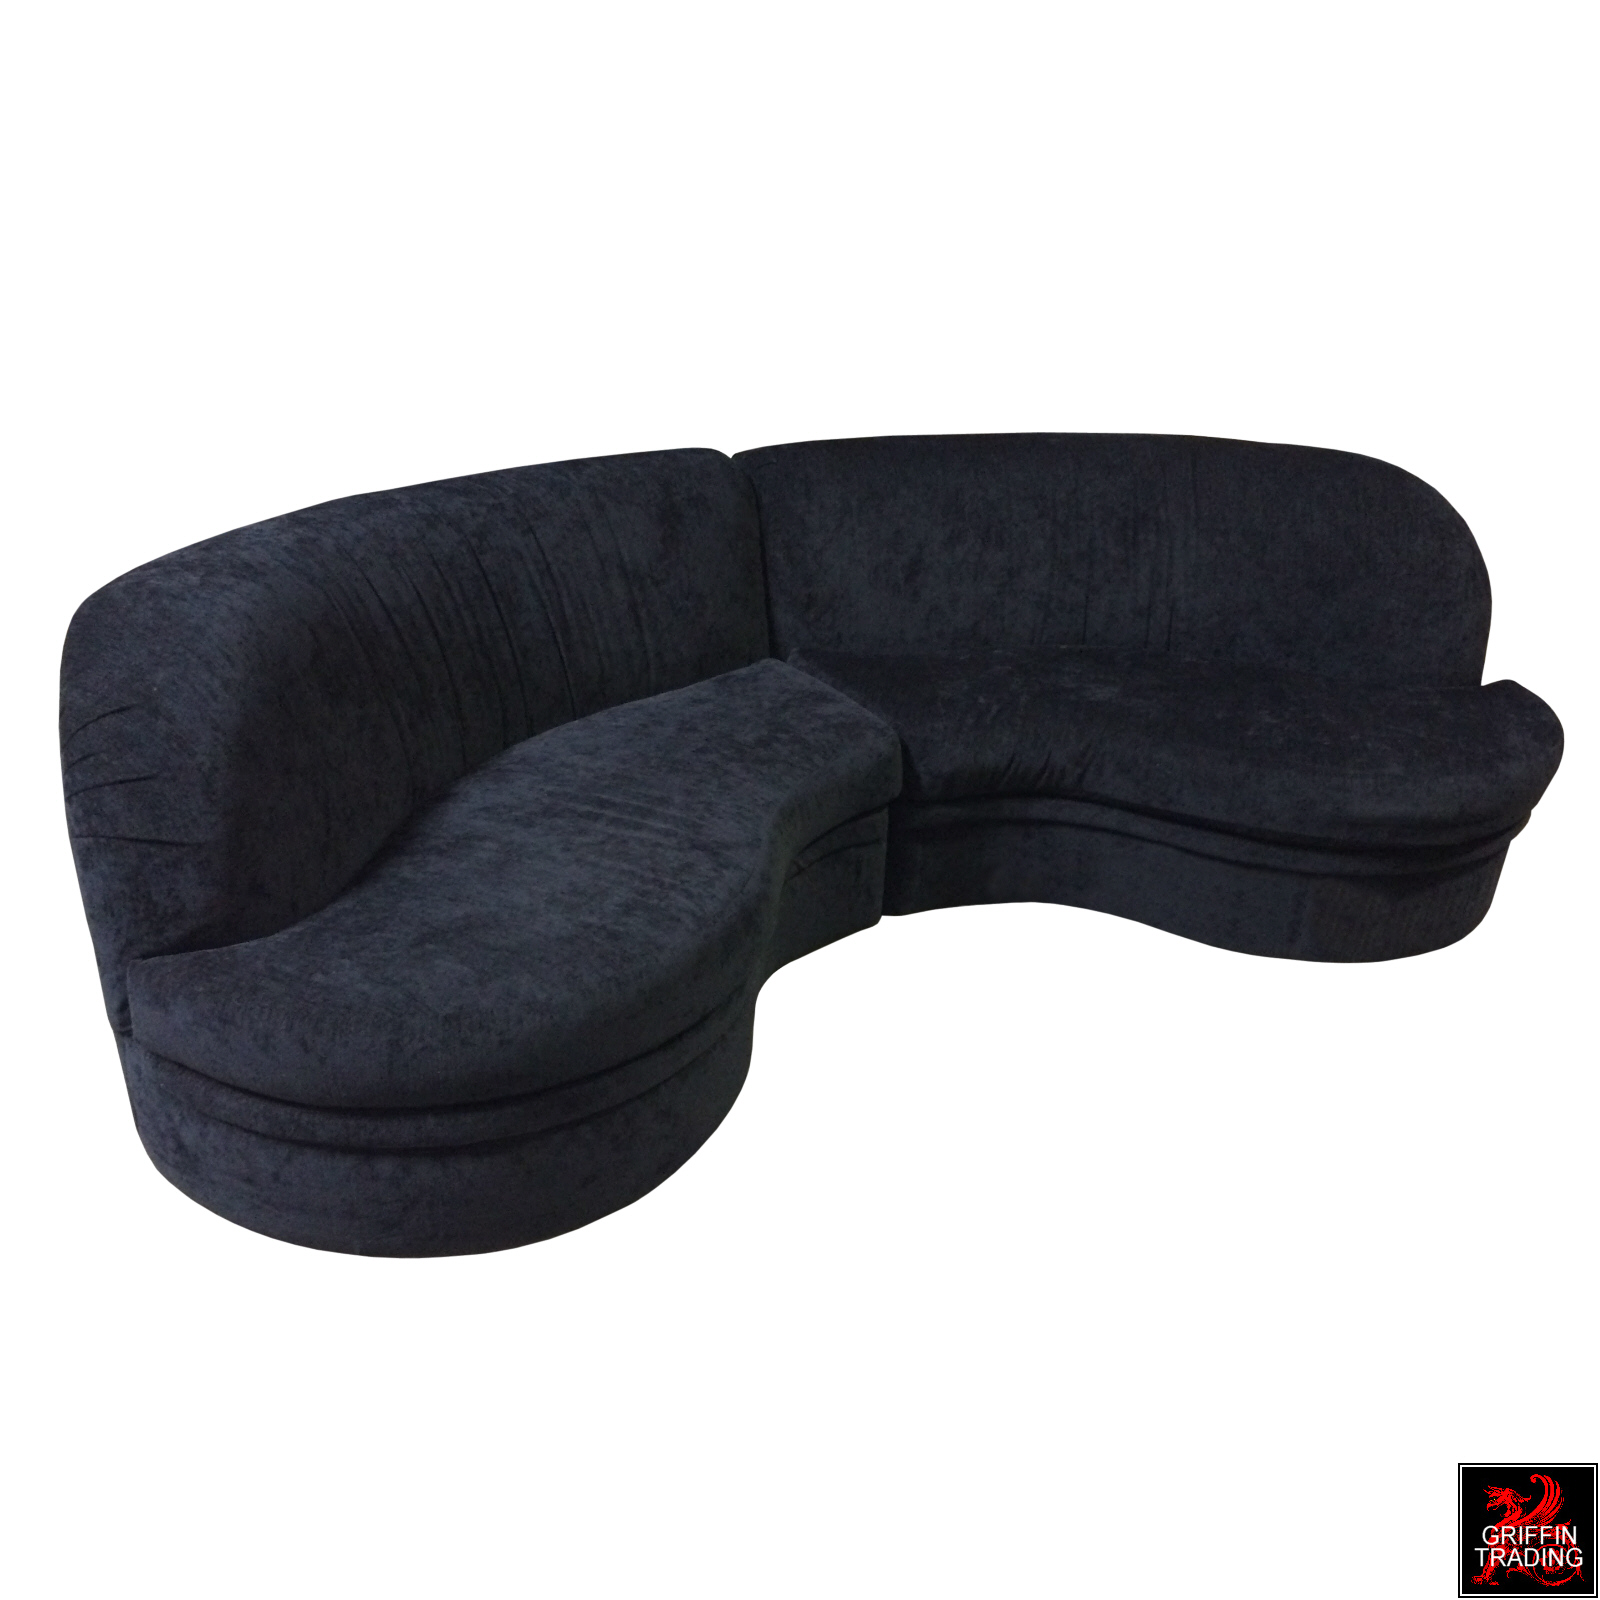 Asser Deskundige Collega Milo Baughman Sectional Curved Sofa - Mid Century Modern | Dallas